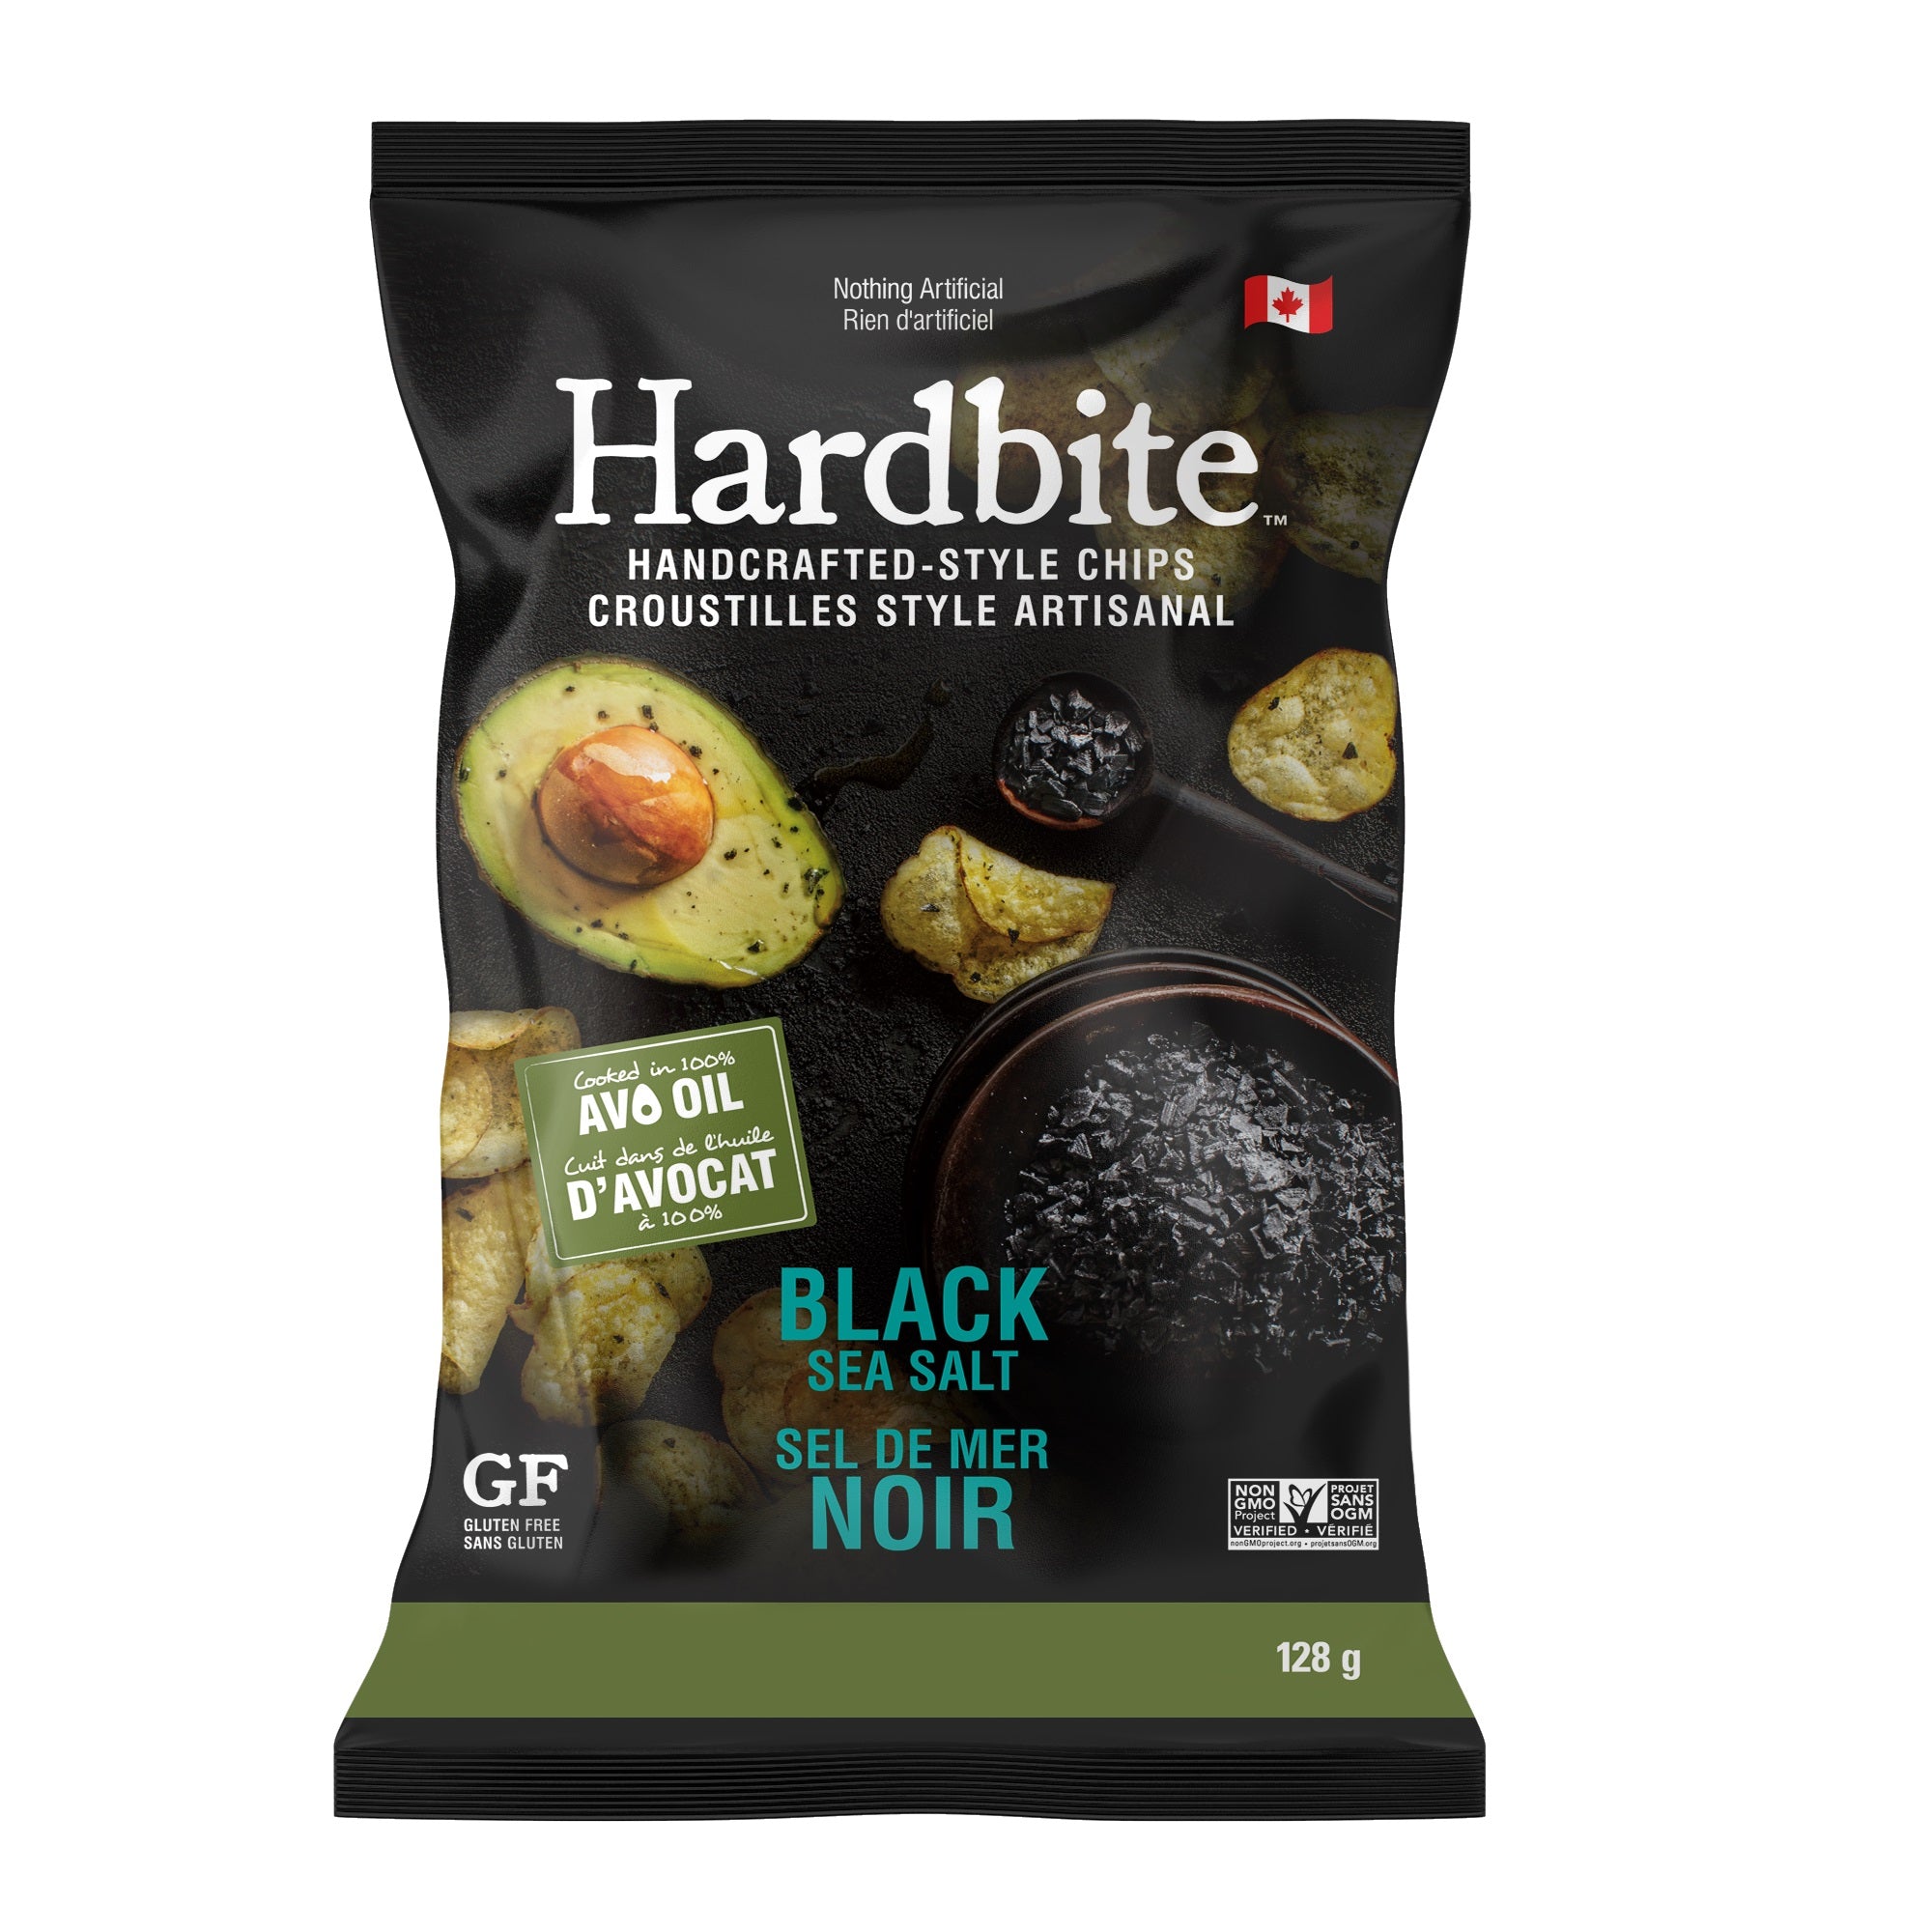 Hardbite Avocado Oil Potato Chips - Black Sea Salt (128g) - Lifestyle Markets